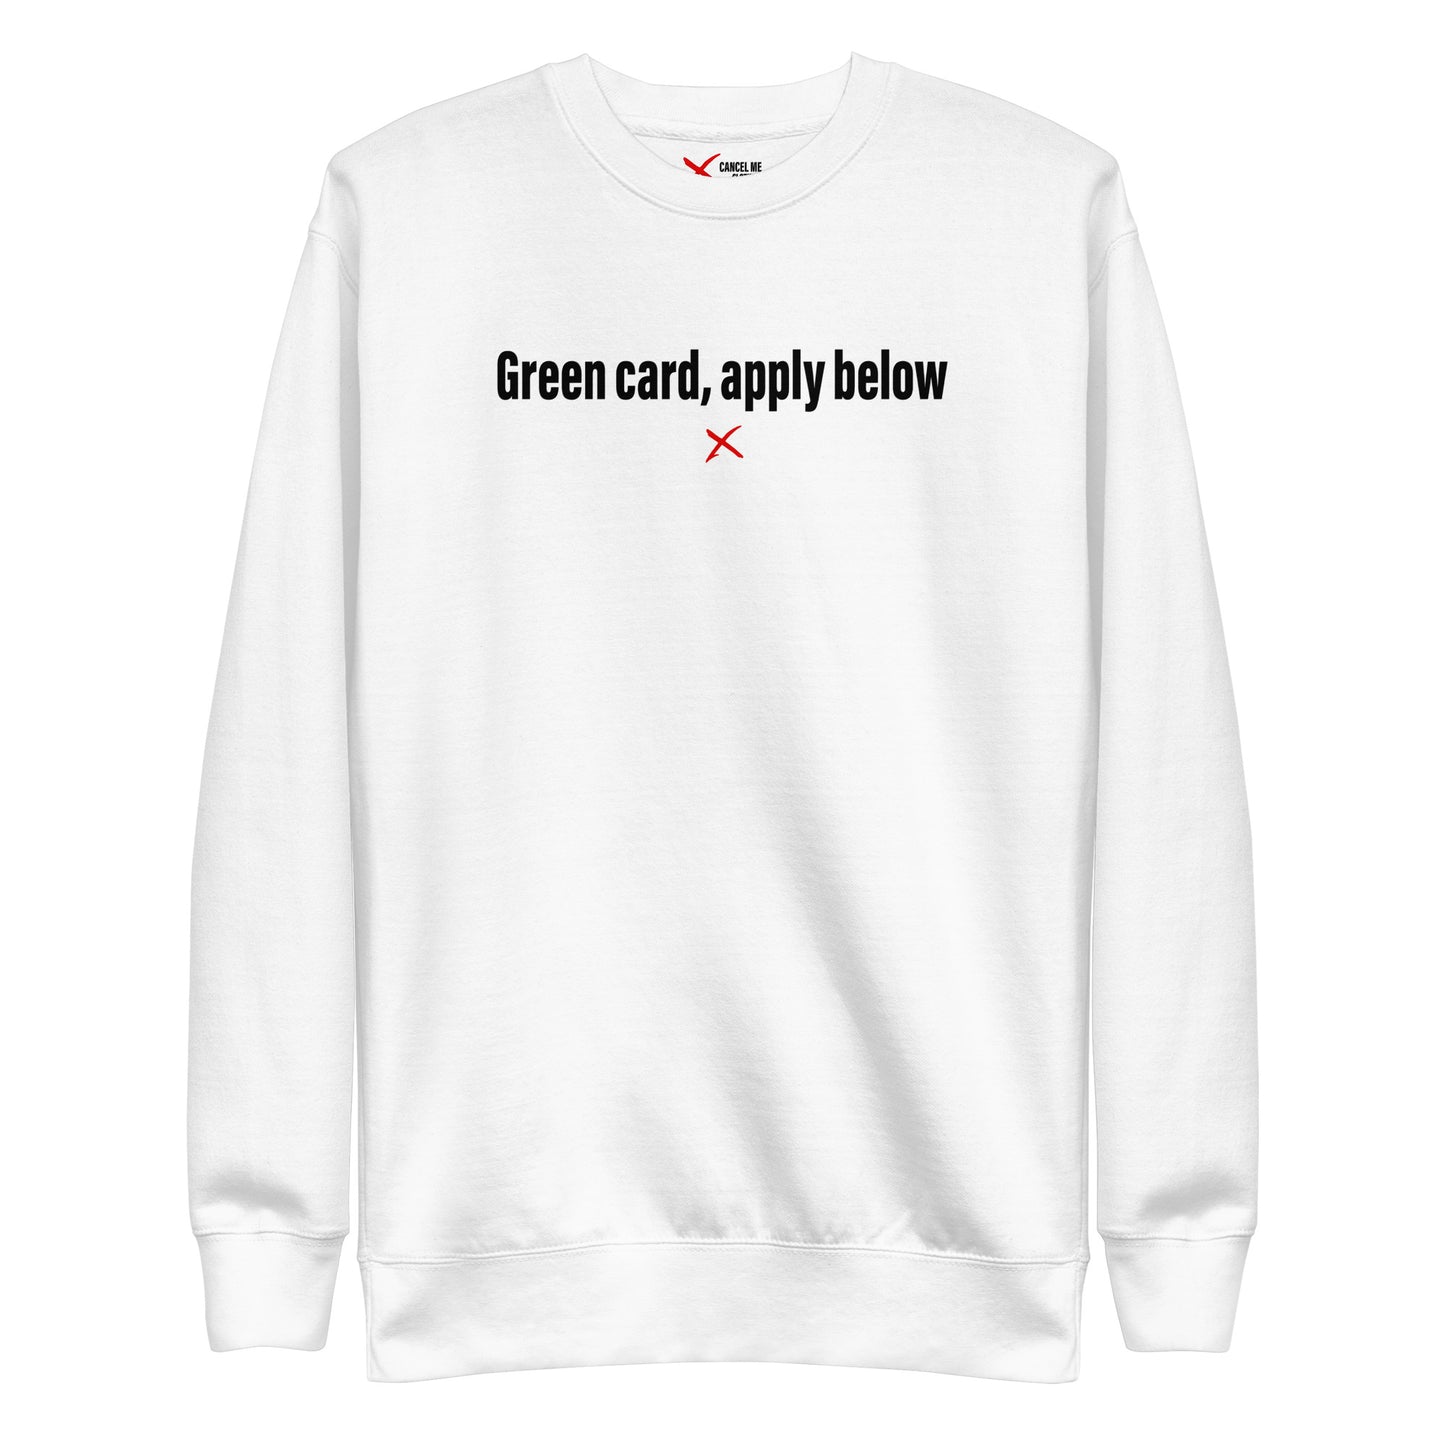 Green card, apply below - Sweatshirt